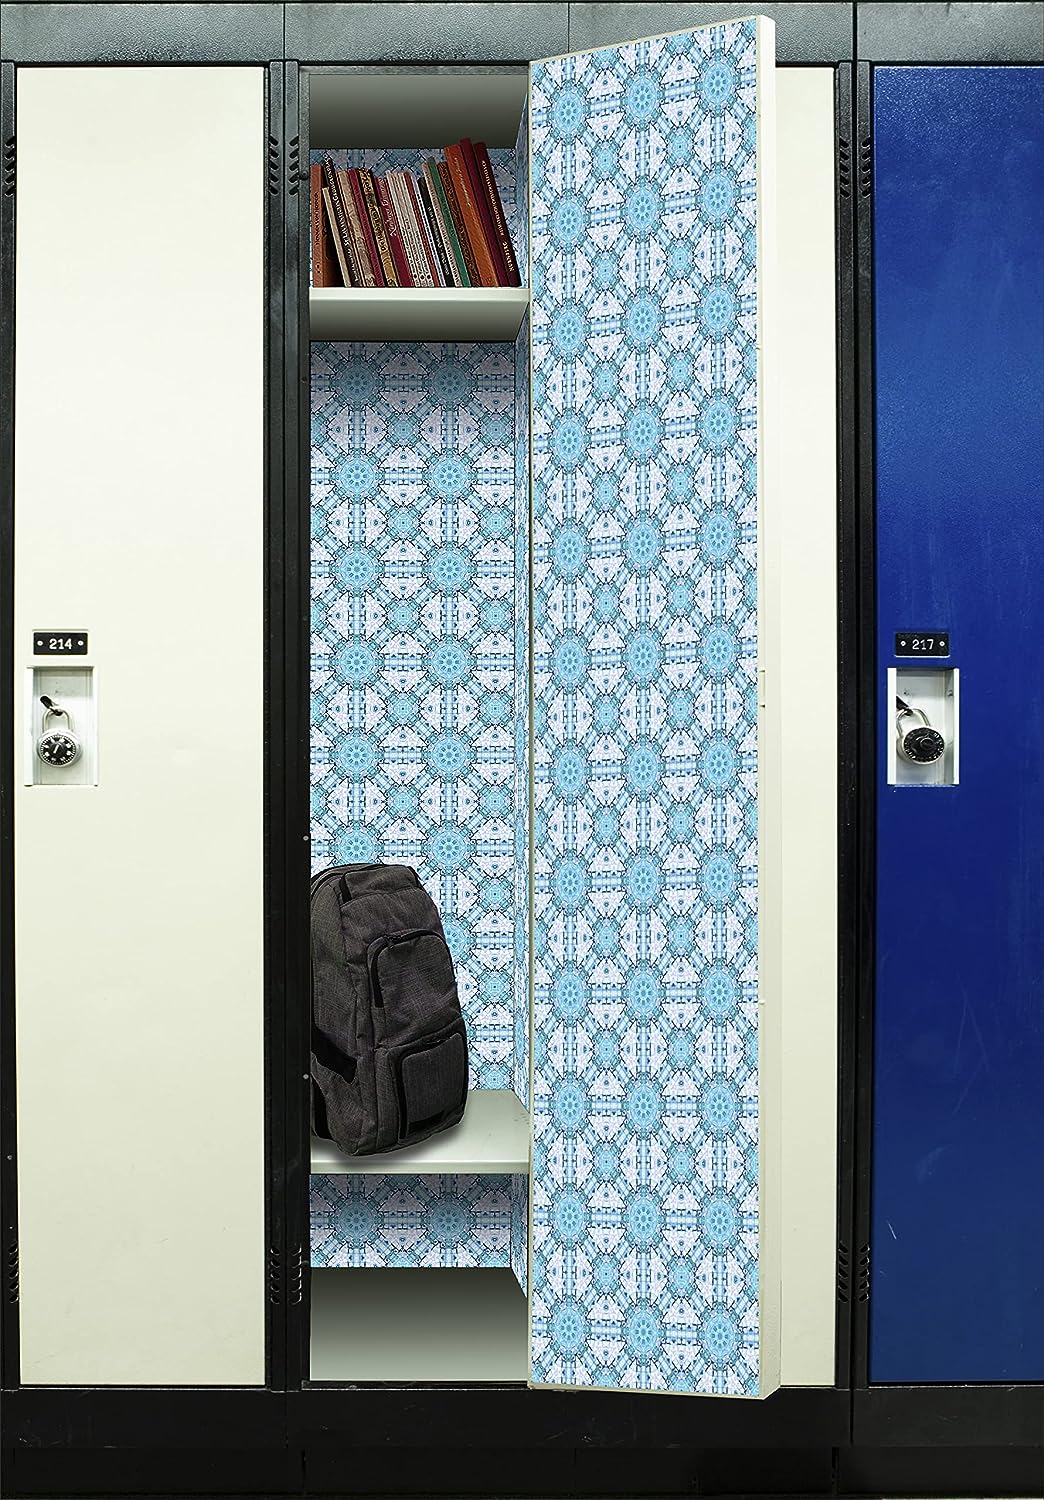 Deluxe School Locker Magnetic Wallpaper (Full sheet Magnetic) - Full Cover Standard Half Lockers - Trimmable, Easy Install, Remove & Reuse - Pack of 12 Sheets - (Geometric Blue vr68)